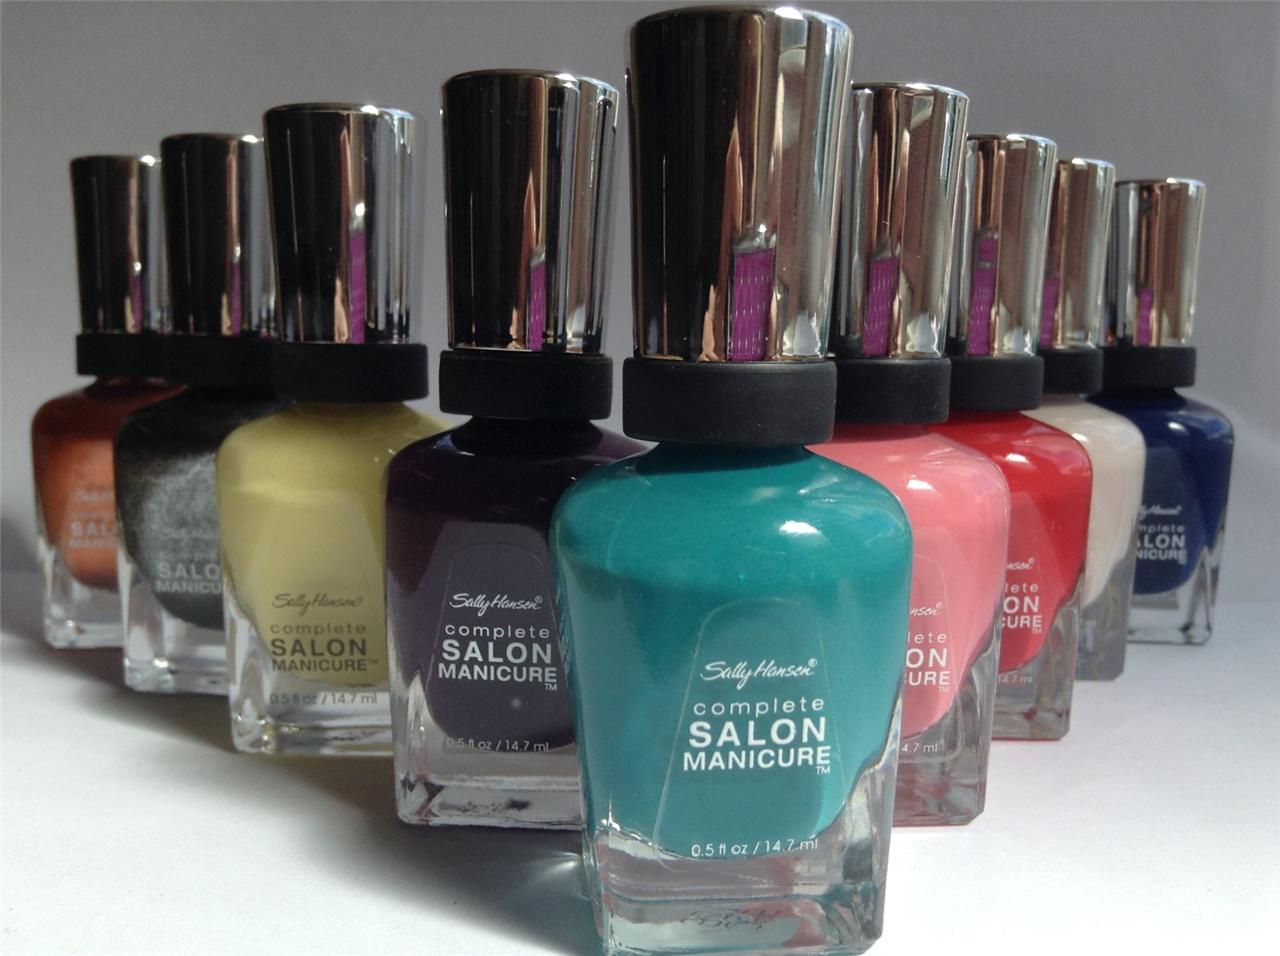 Sally Hansen Complete Salon Manicure Nail Polish - Greenlight - wide 9